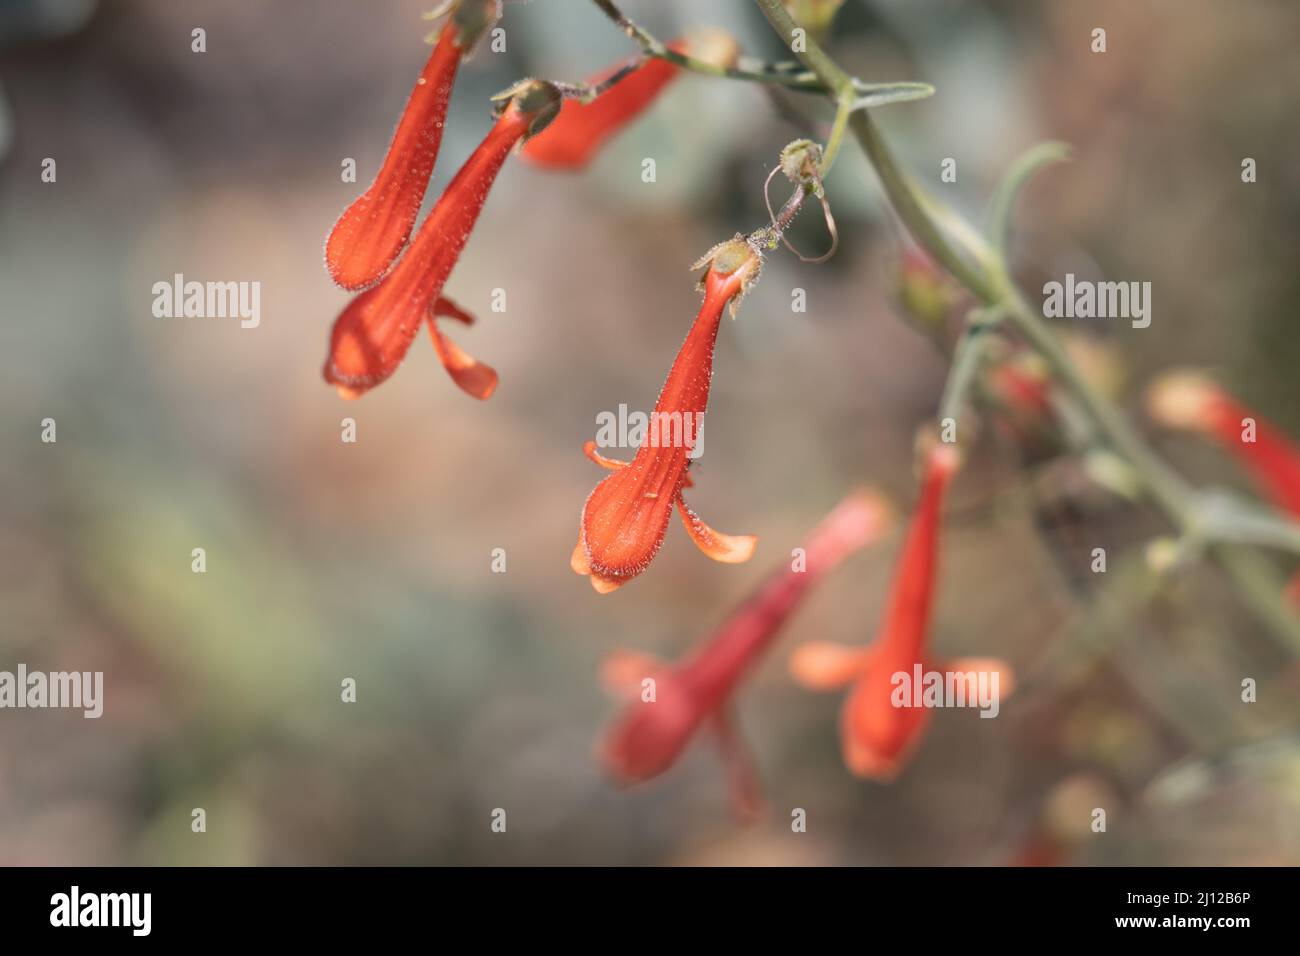 Red flowering racemose panicle inflorescence of Penstemon Rostriflorus, Plantaginaceae, native subshrub in the San Bernardino Mountains, Summer. Stock Photo